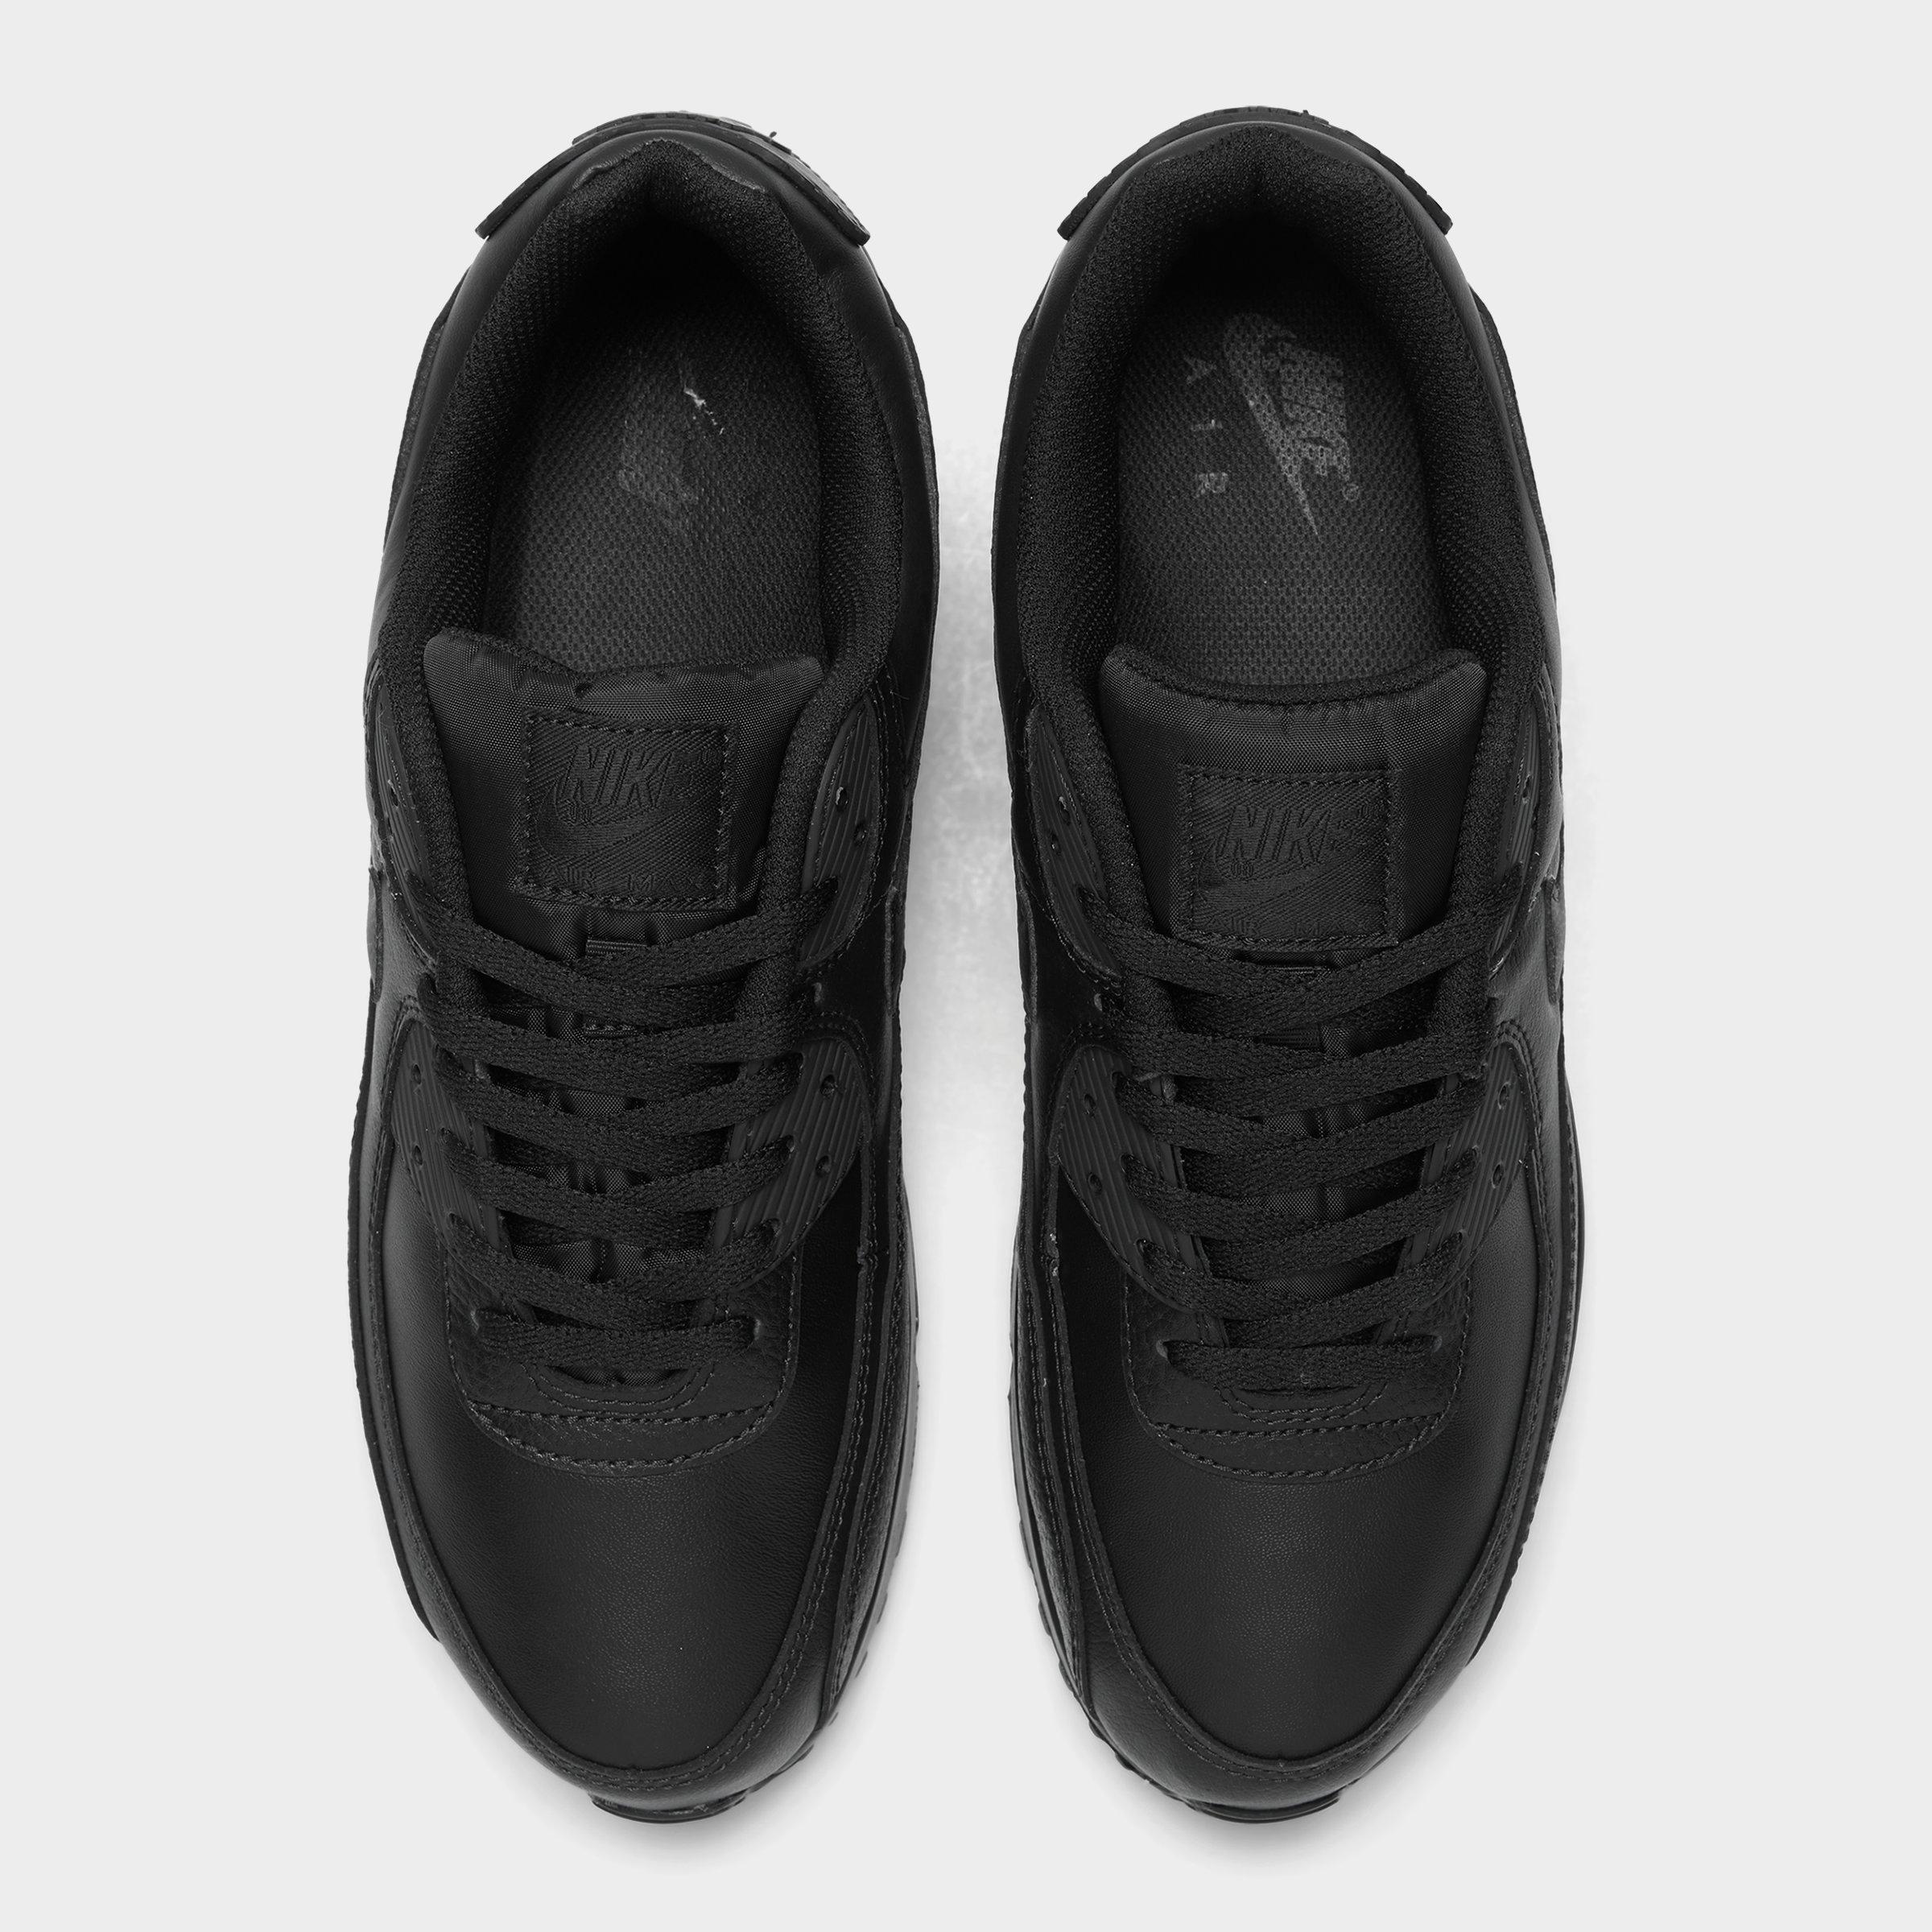 nike black leather sneakers